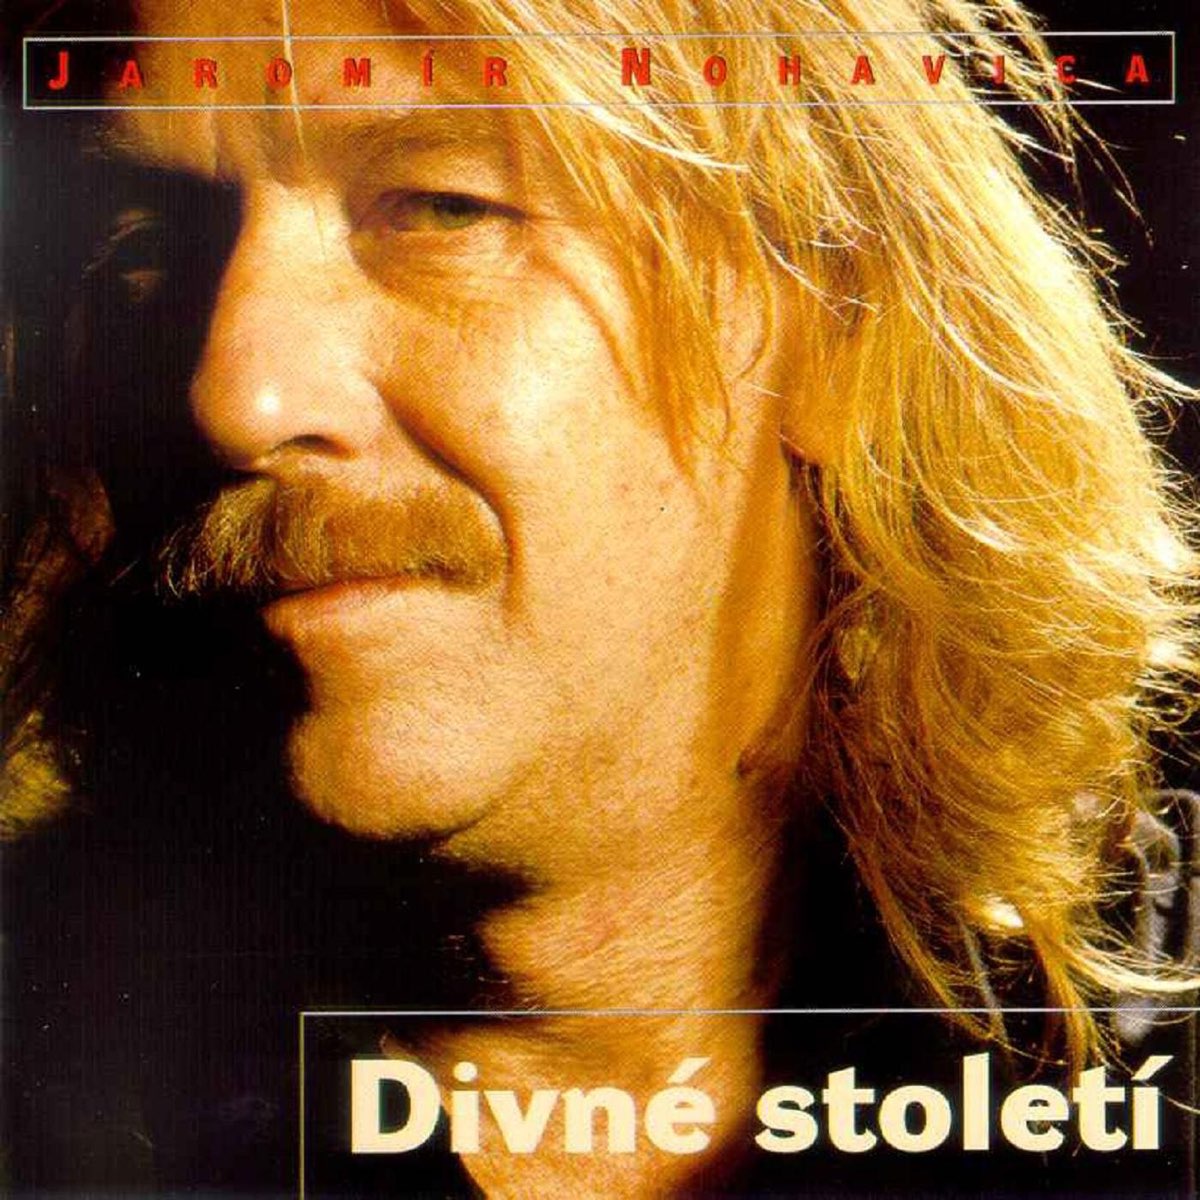 Divne Stoleti - Album by Jaromír Nohavica - Apple Music